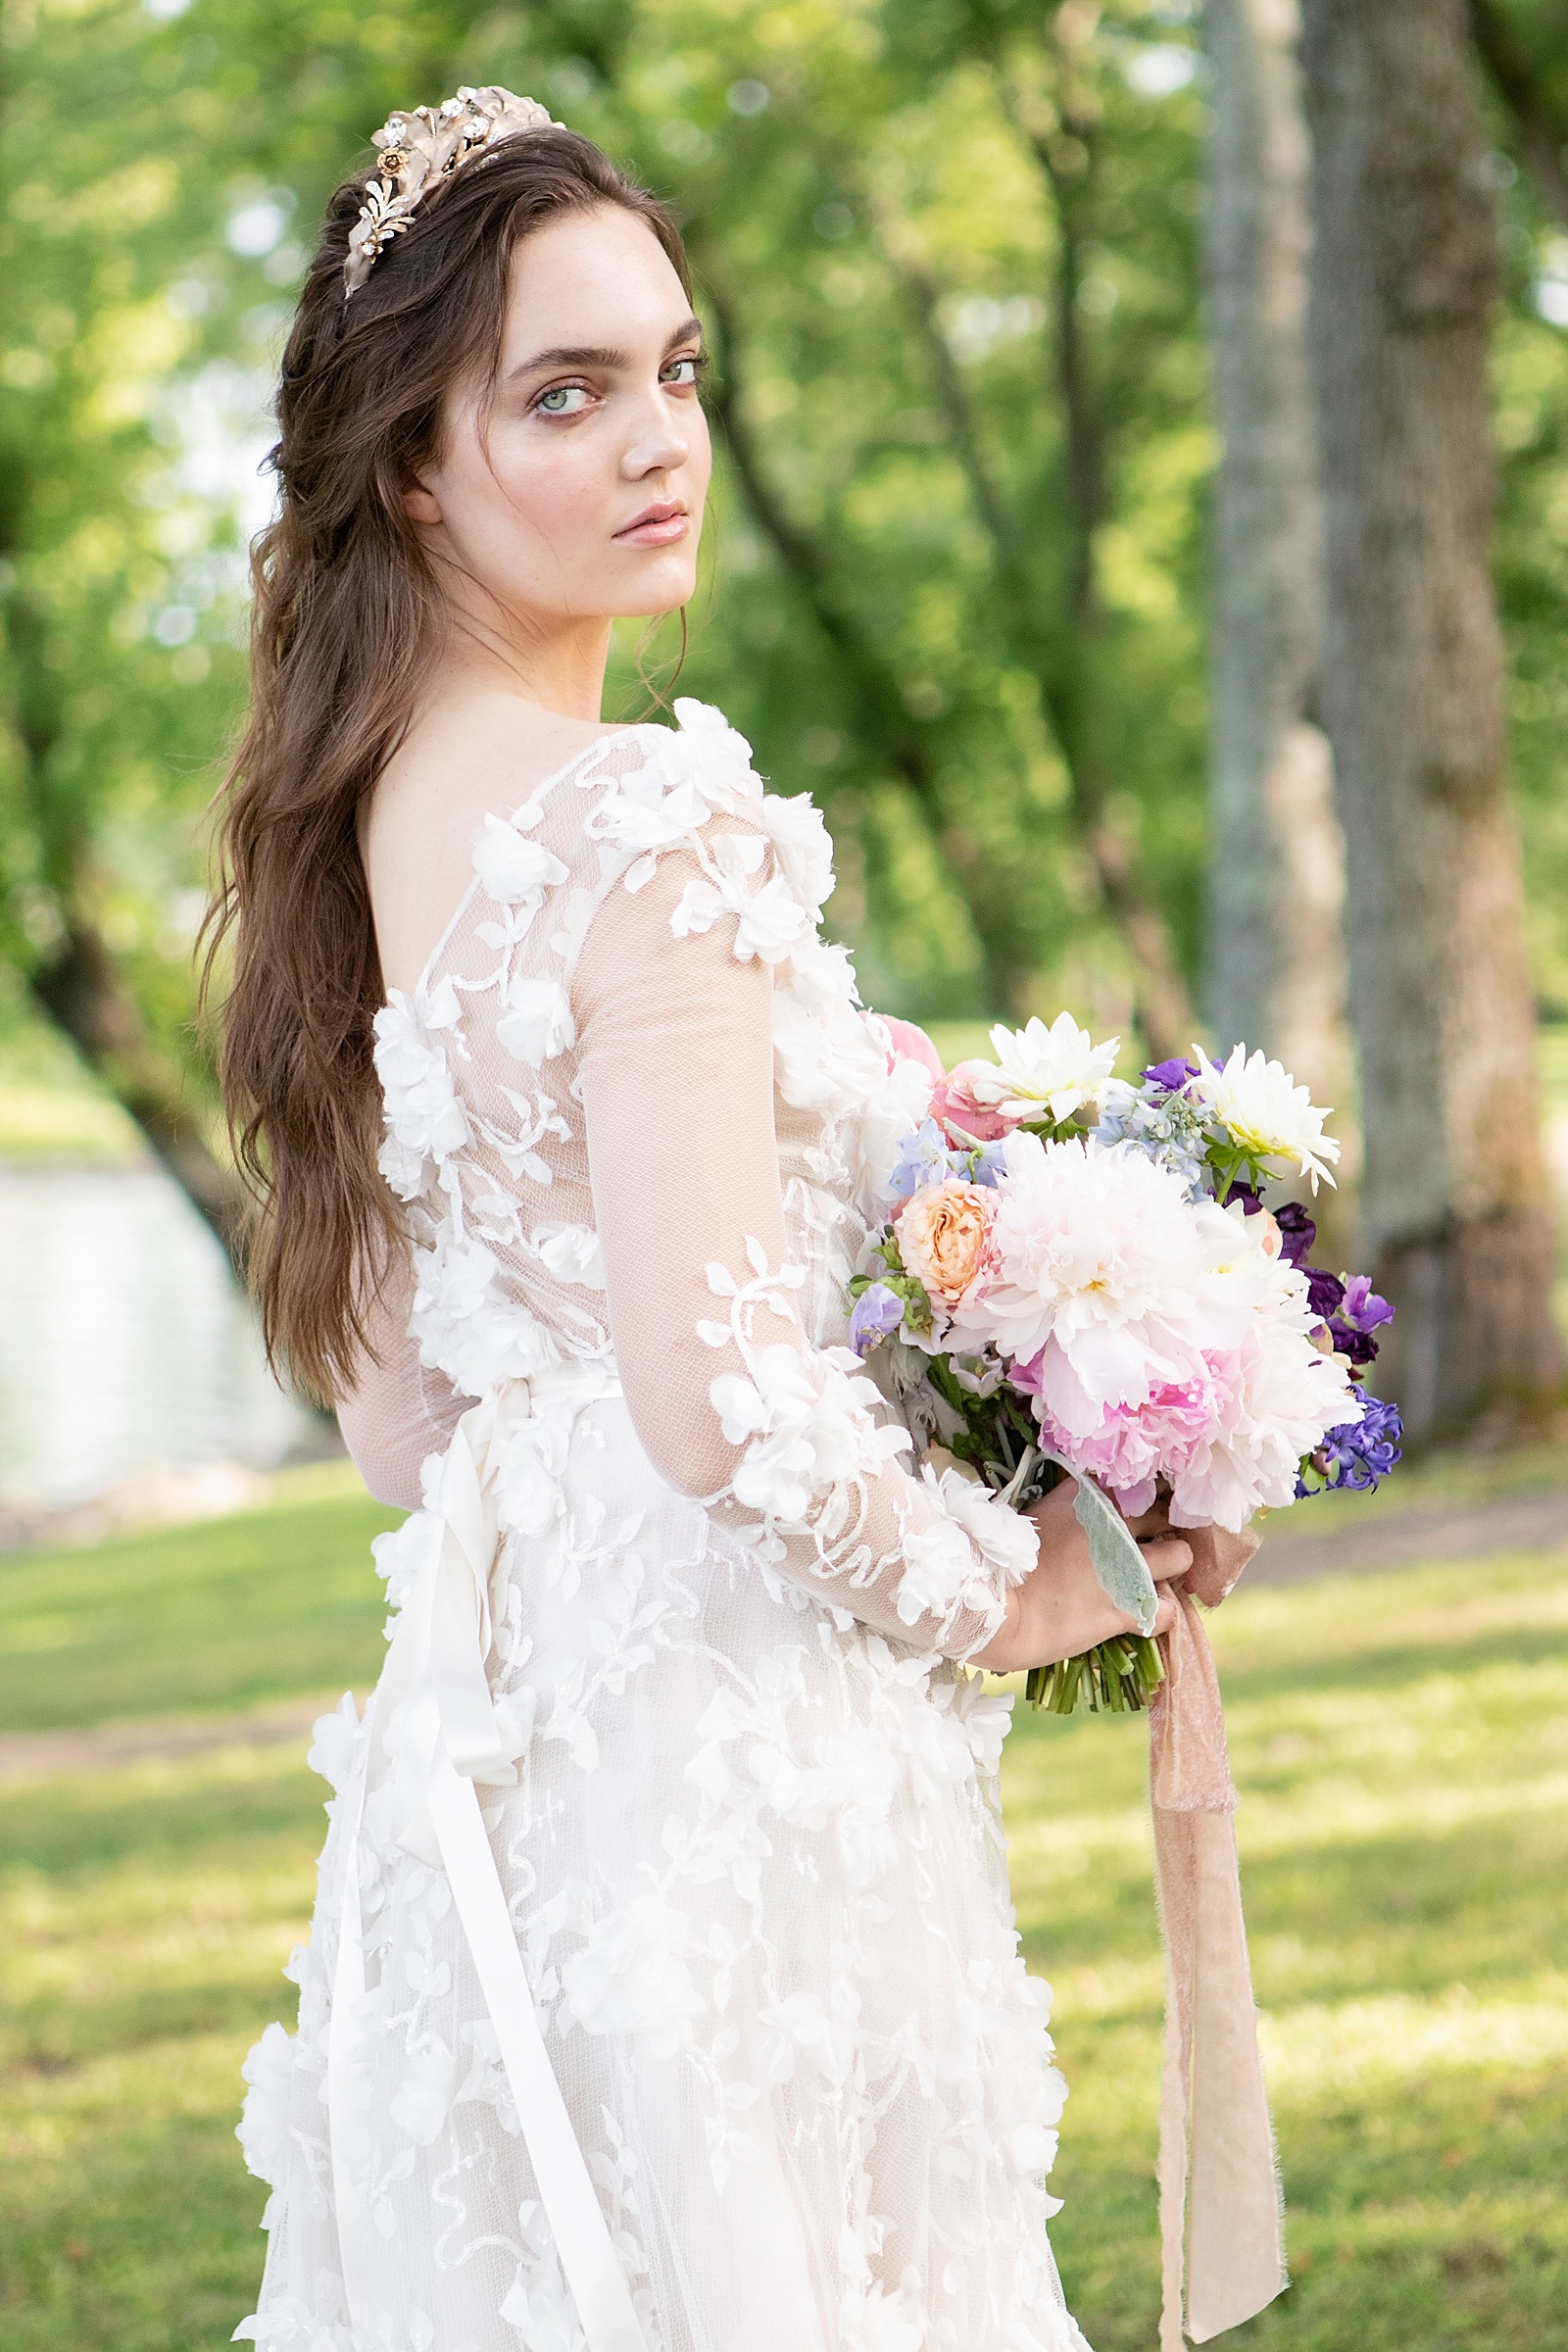 Floral applique wedding dress